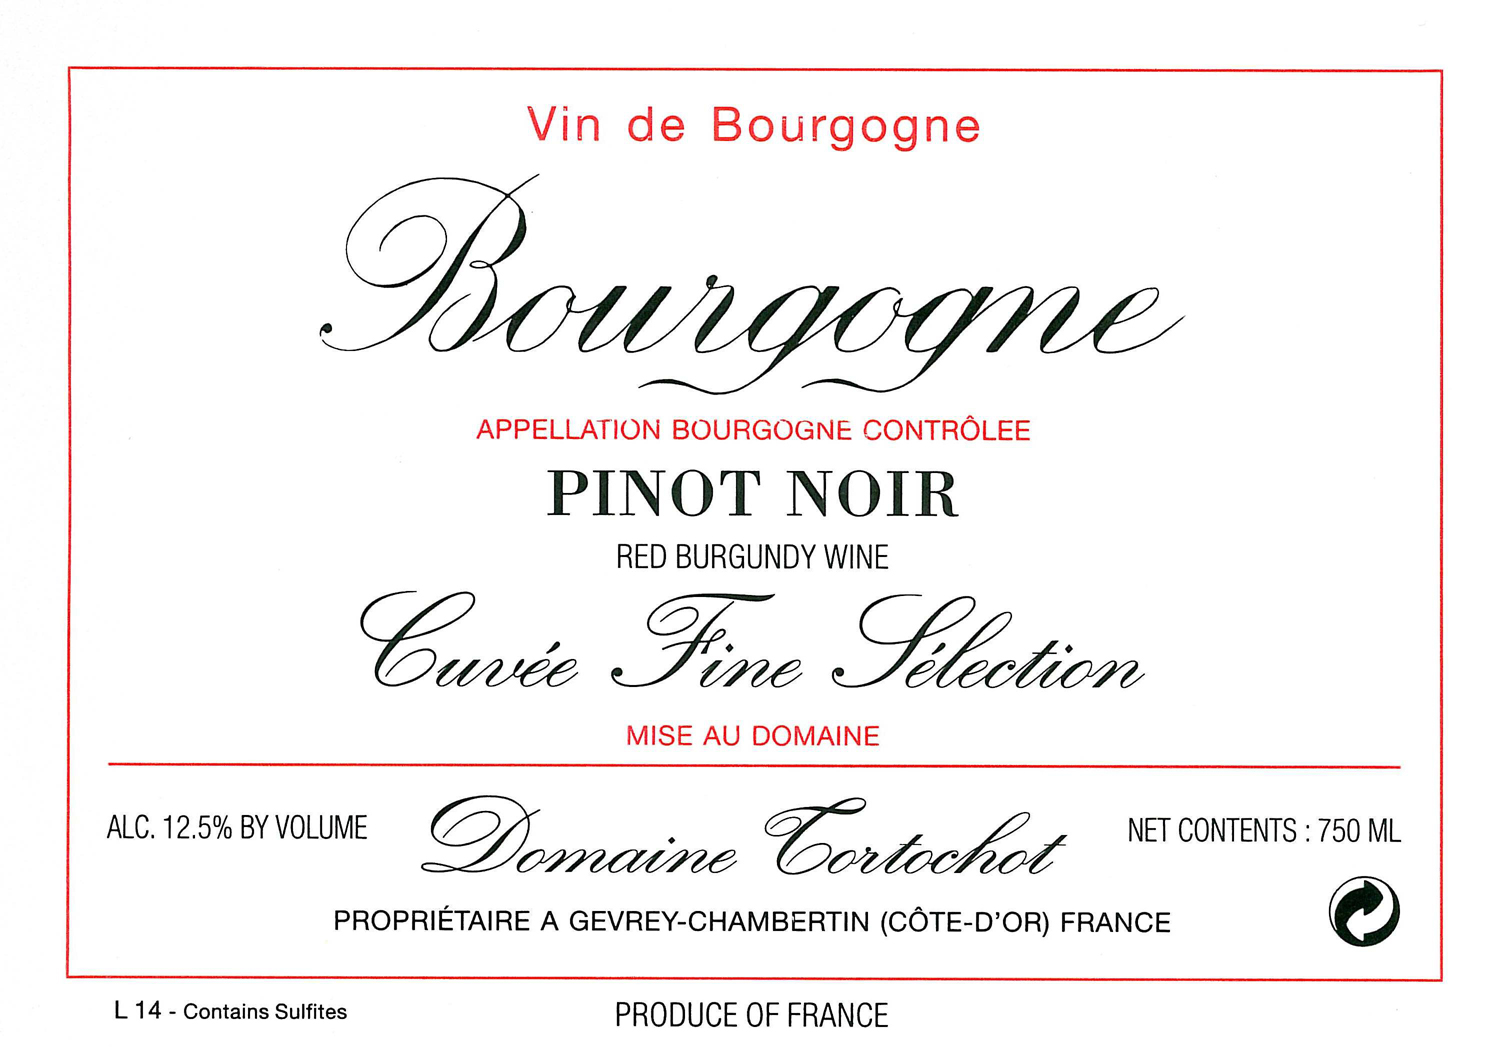 Tortochot Bourgogne Pinot Noir Cuvee Fine Selection 2016